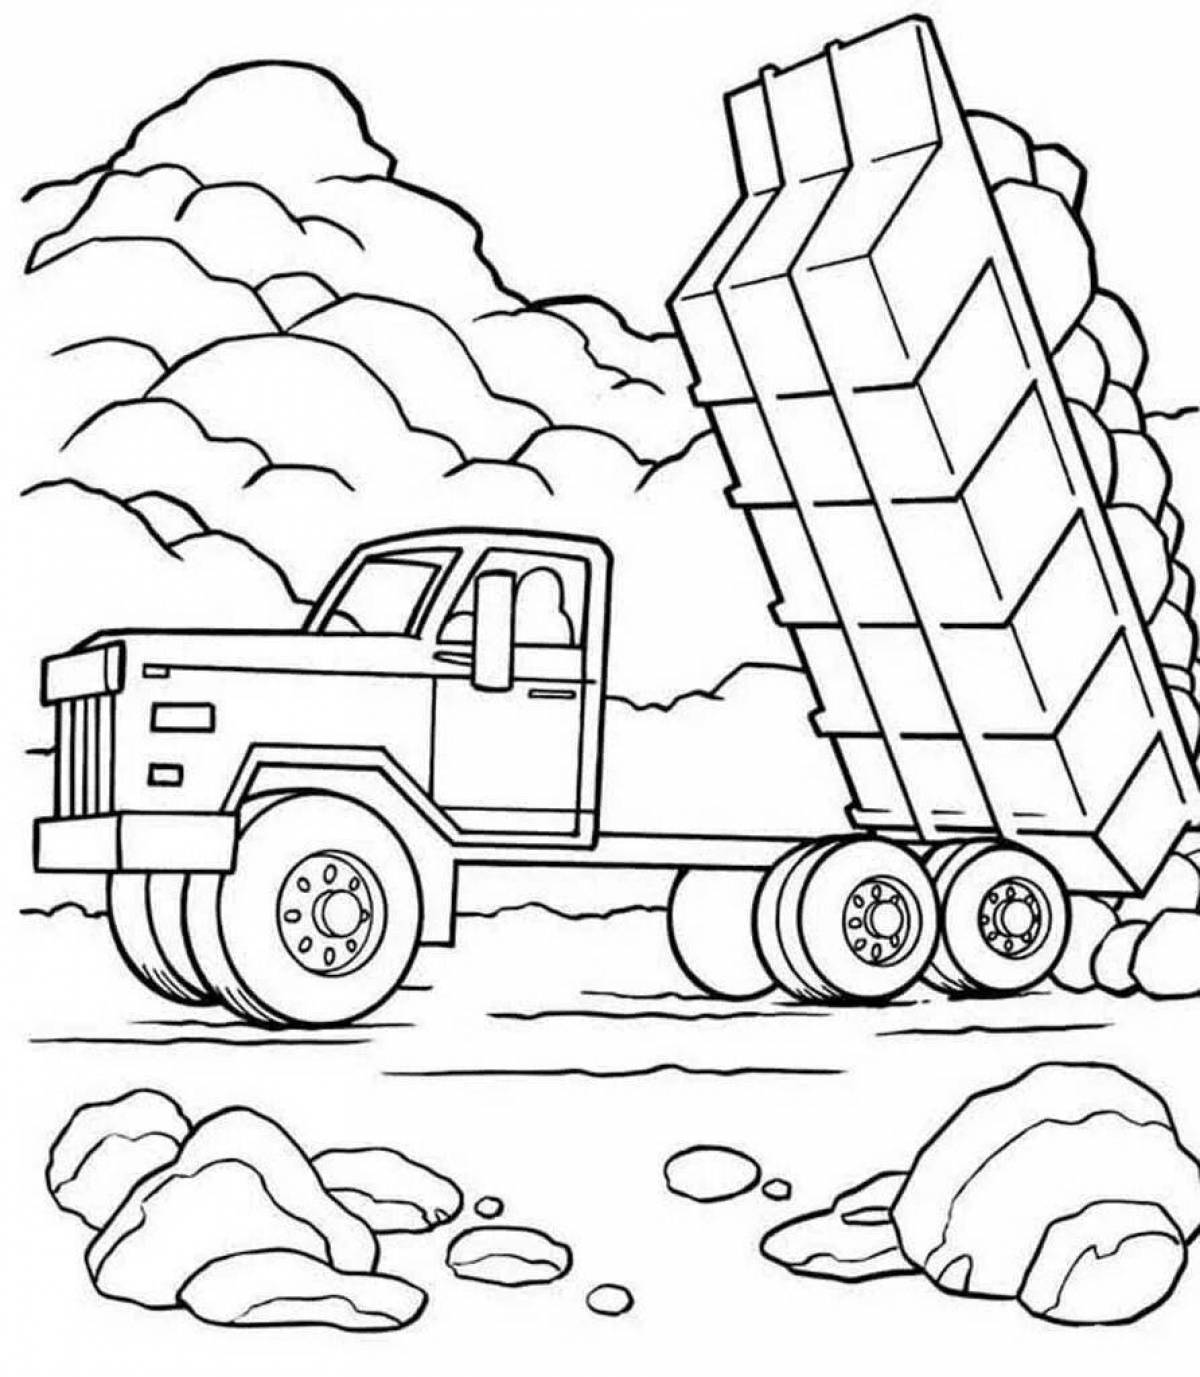 Impressive pre-k dump truck coloring page